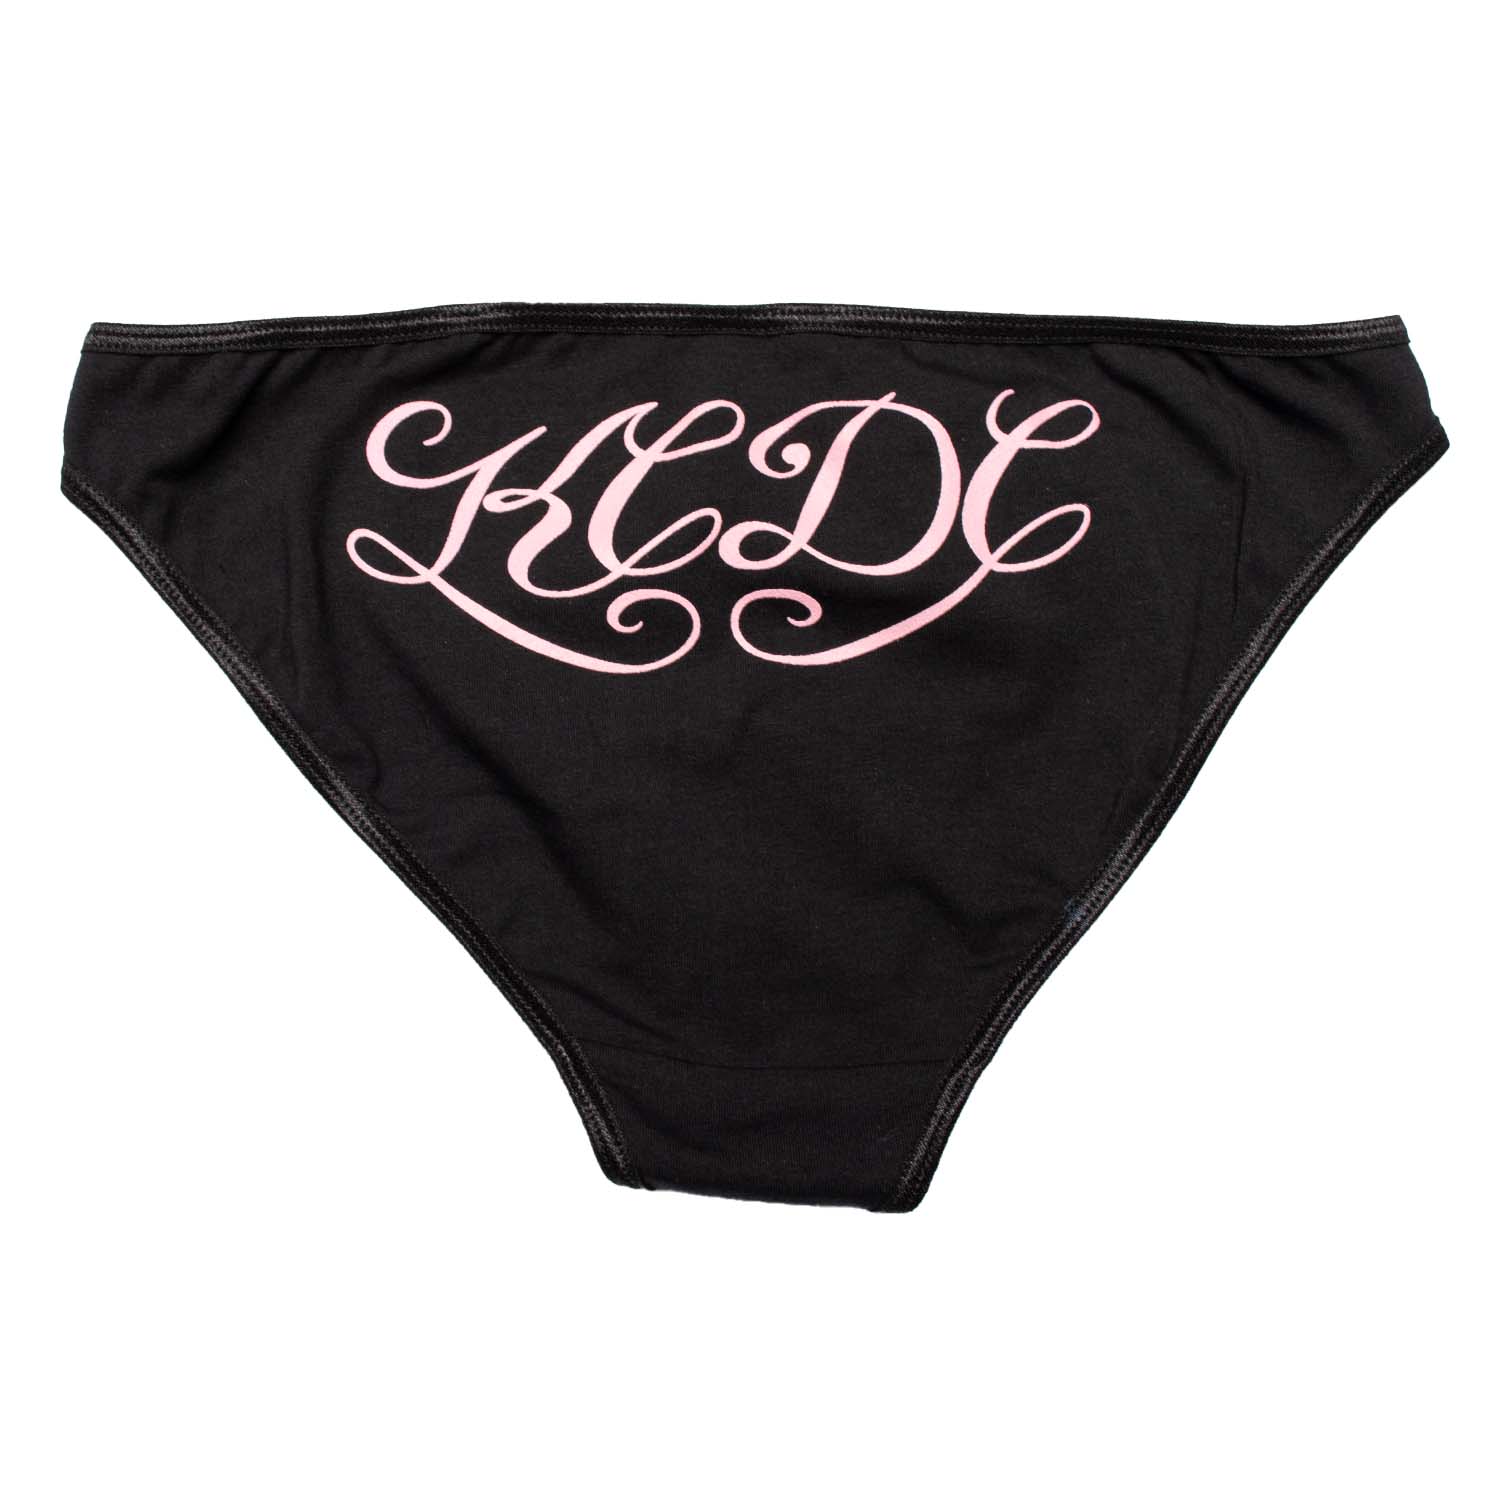 Black bikini panty with pink KCDC script printed on butt.